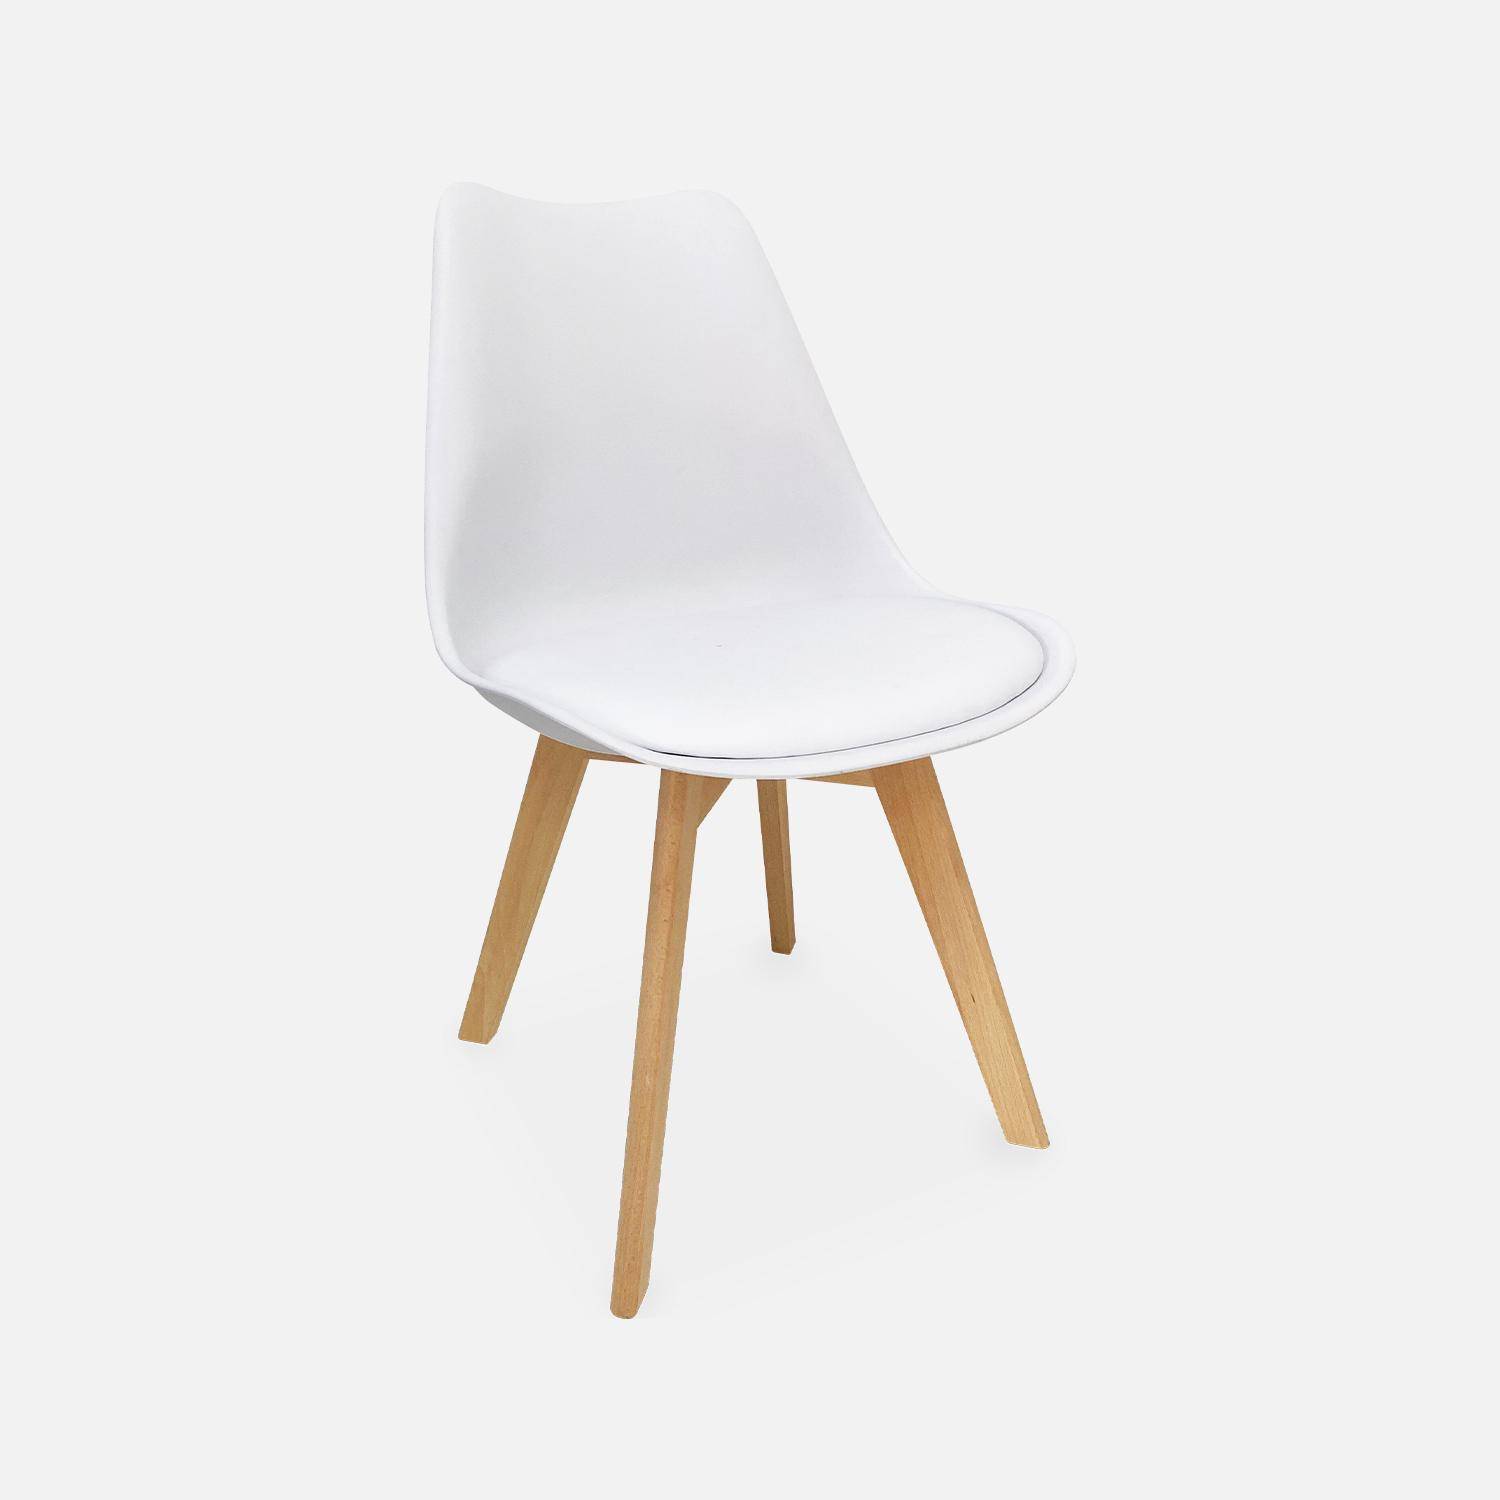 Conjunto de 4 cadeiras escandinavas, pernas em faia, cadeiras de 1 lugar, branco Photo4